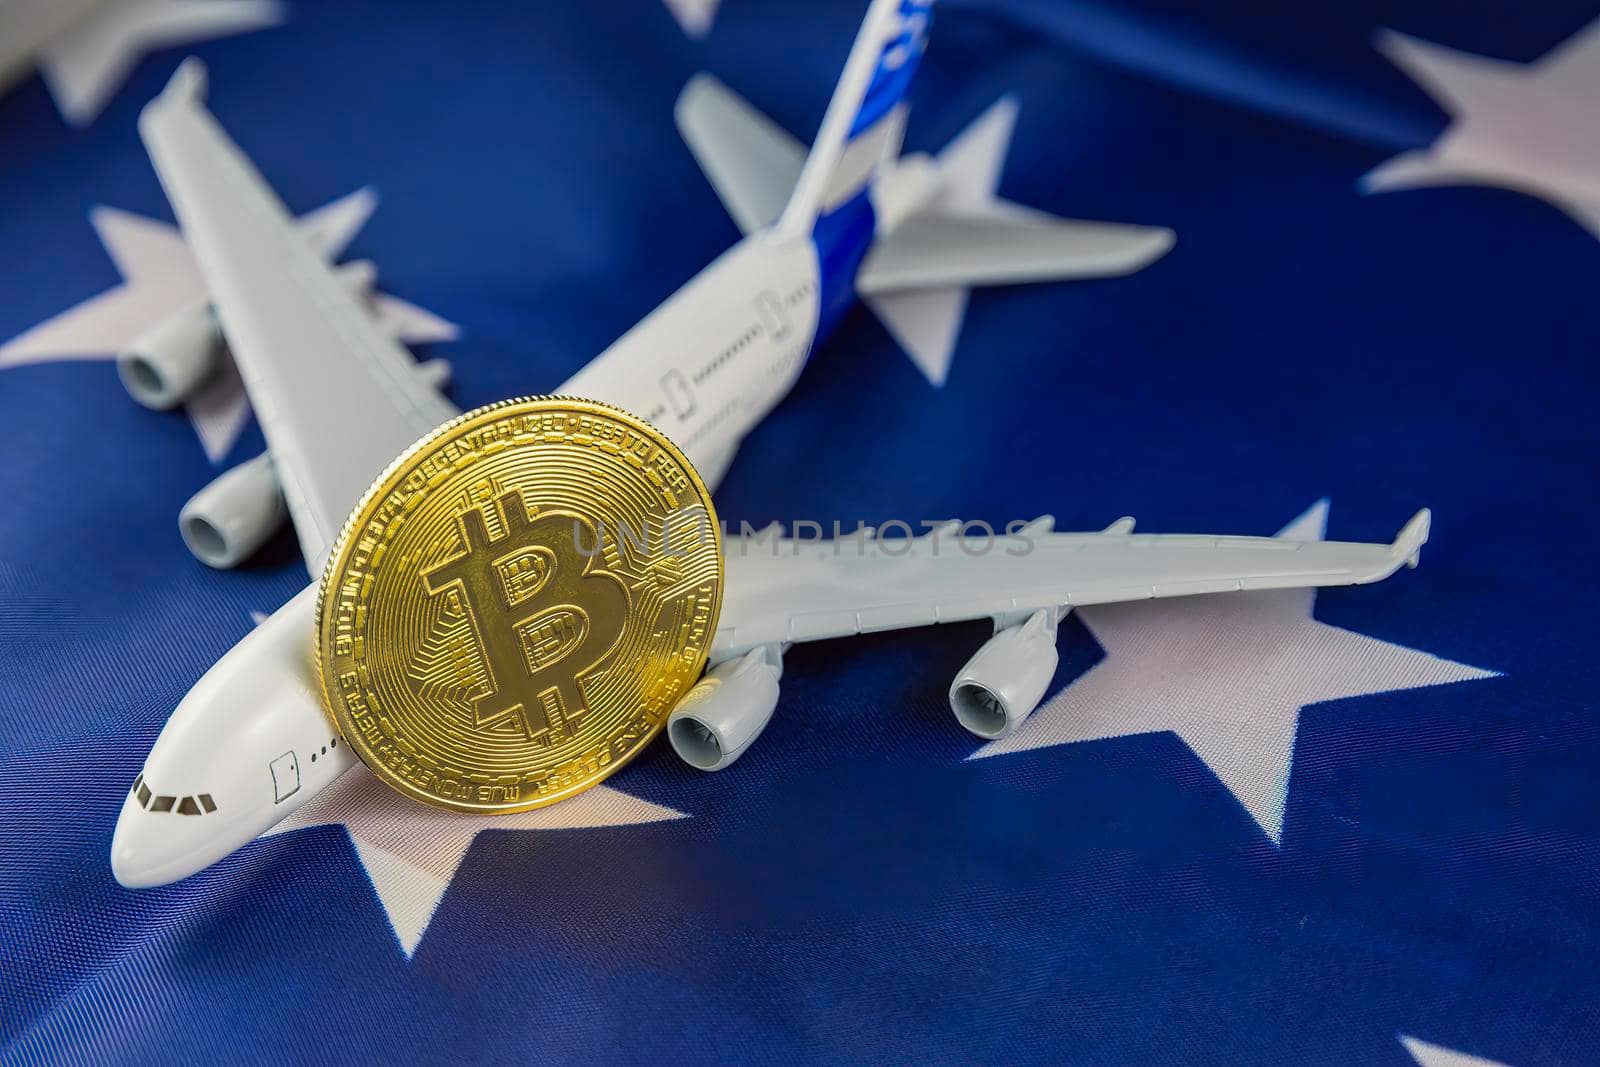 plane and bitcoin coins by zokov